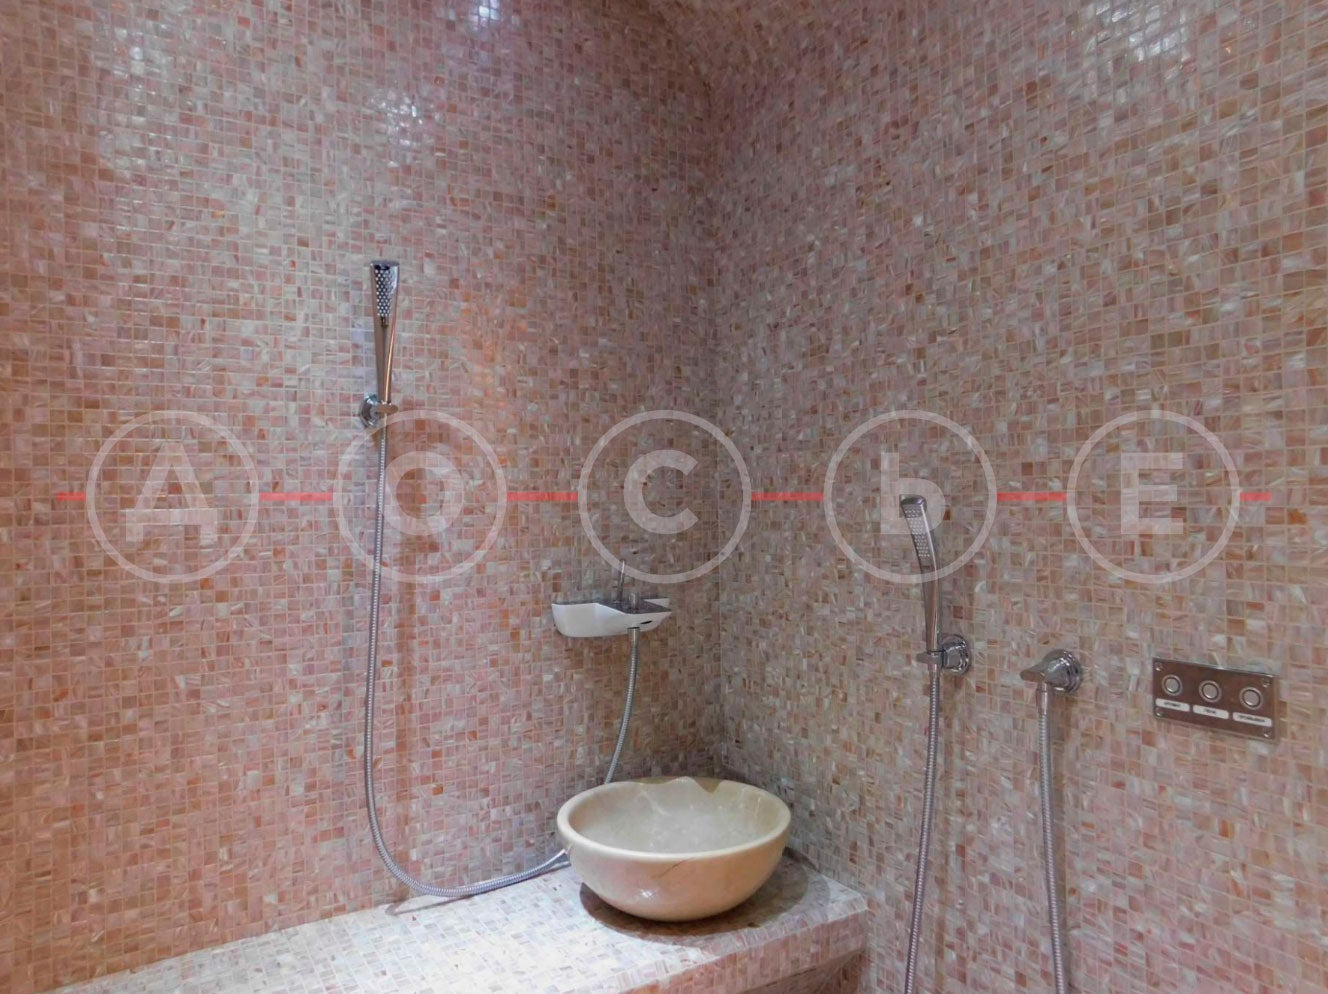 The “fancy shower” includes an “aroma foam” mode